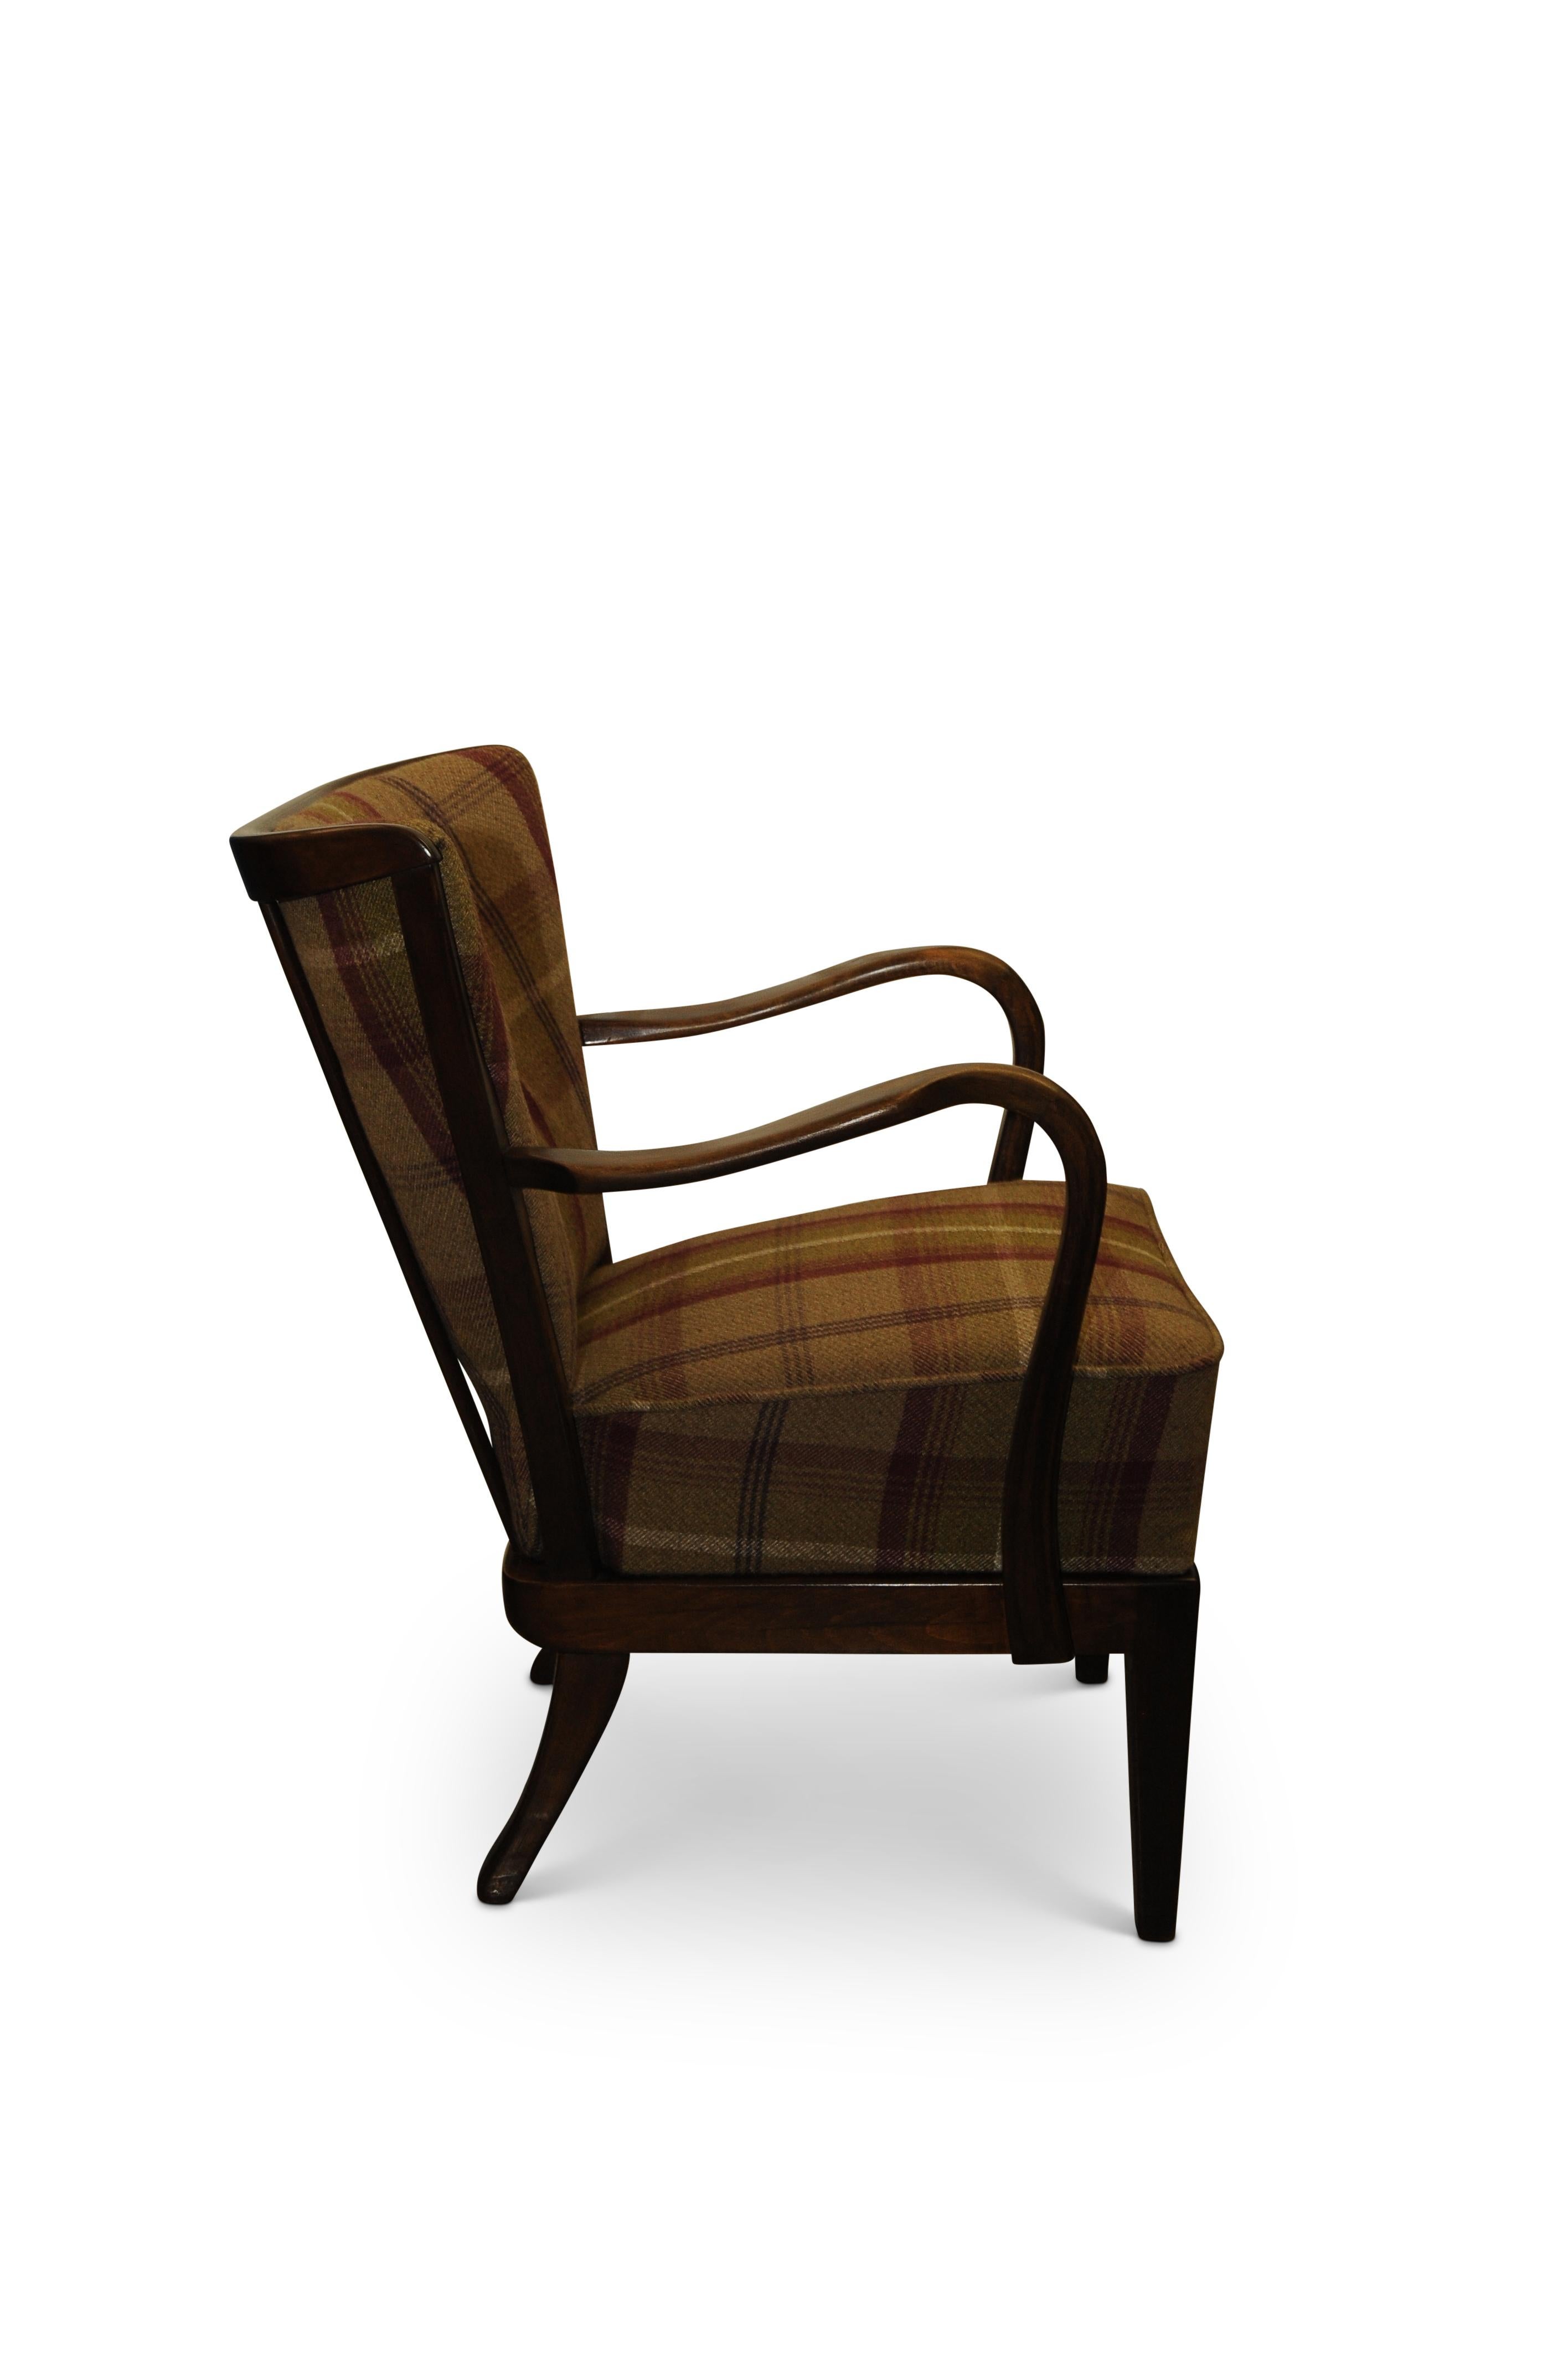 A DUX Scandinavian midcentury Art Deco bentwood armchair with patterned upholstery.

Elegant and timeless designed bentwood Art Deco armchair by renowned Scandinavian Manufacturers DUX.